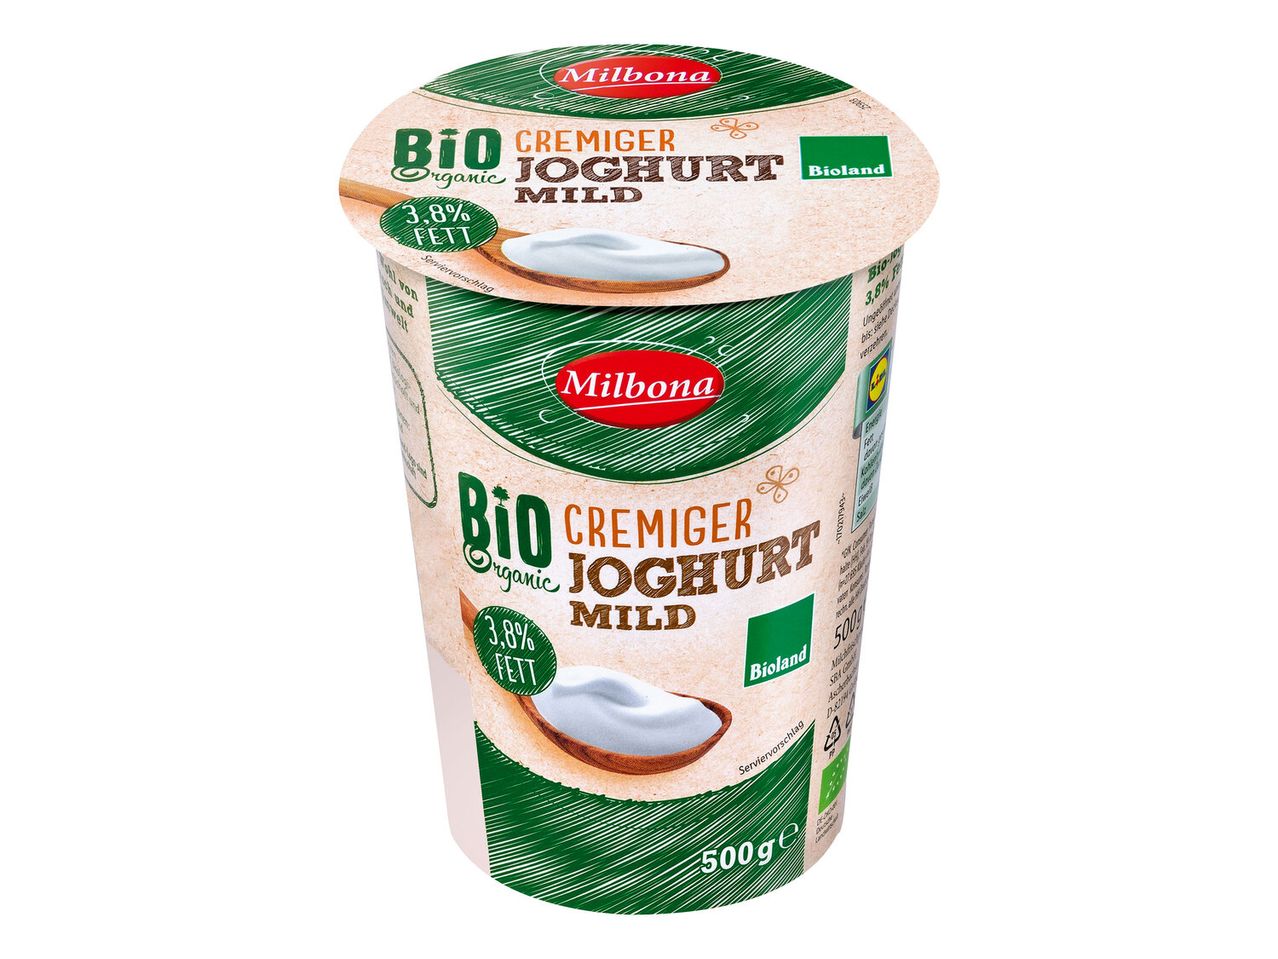 mild Bioland Joghurt,